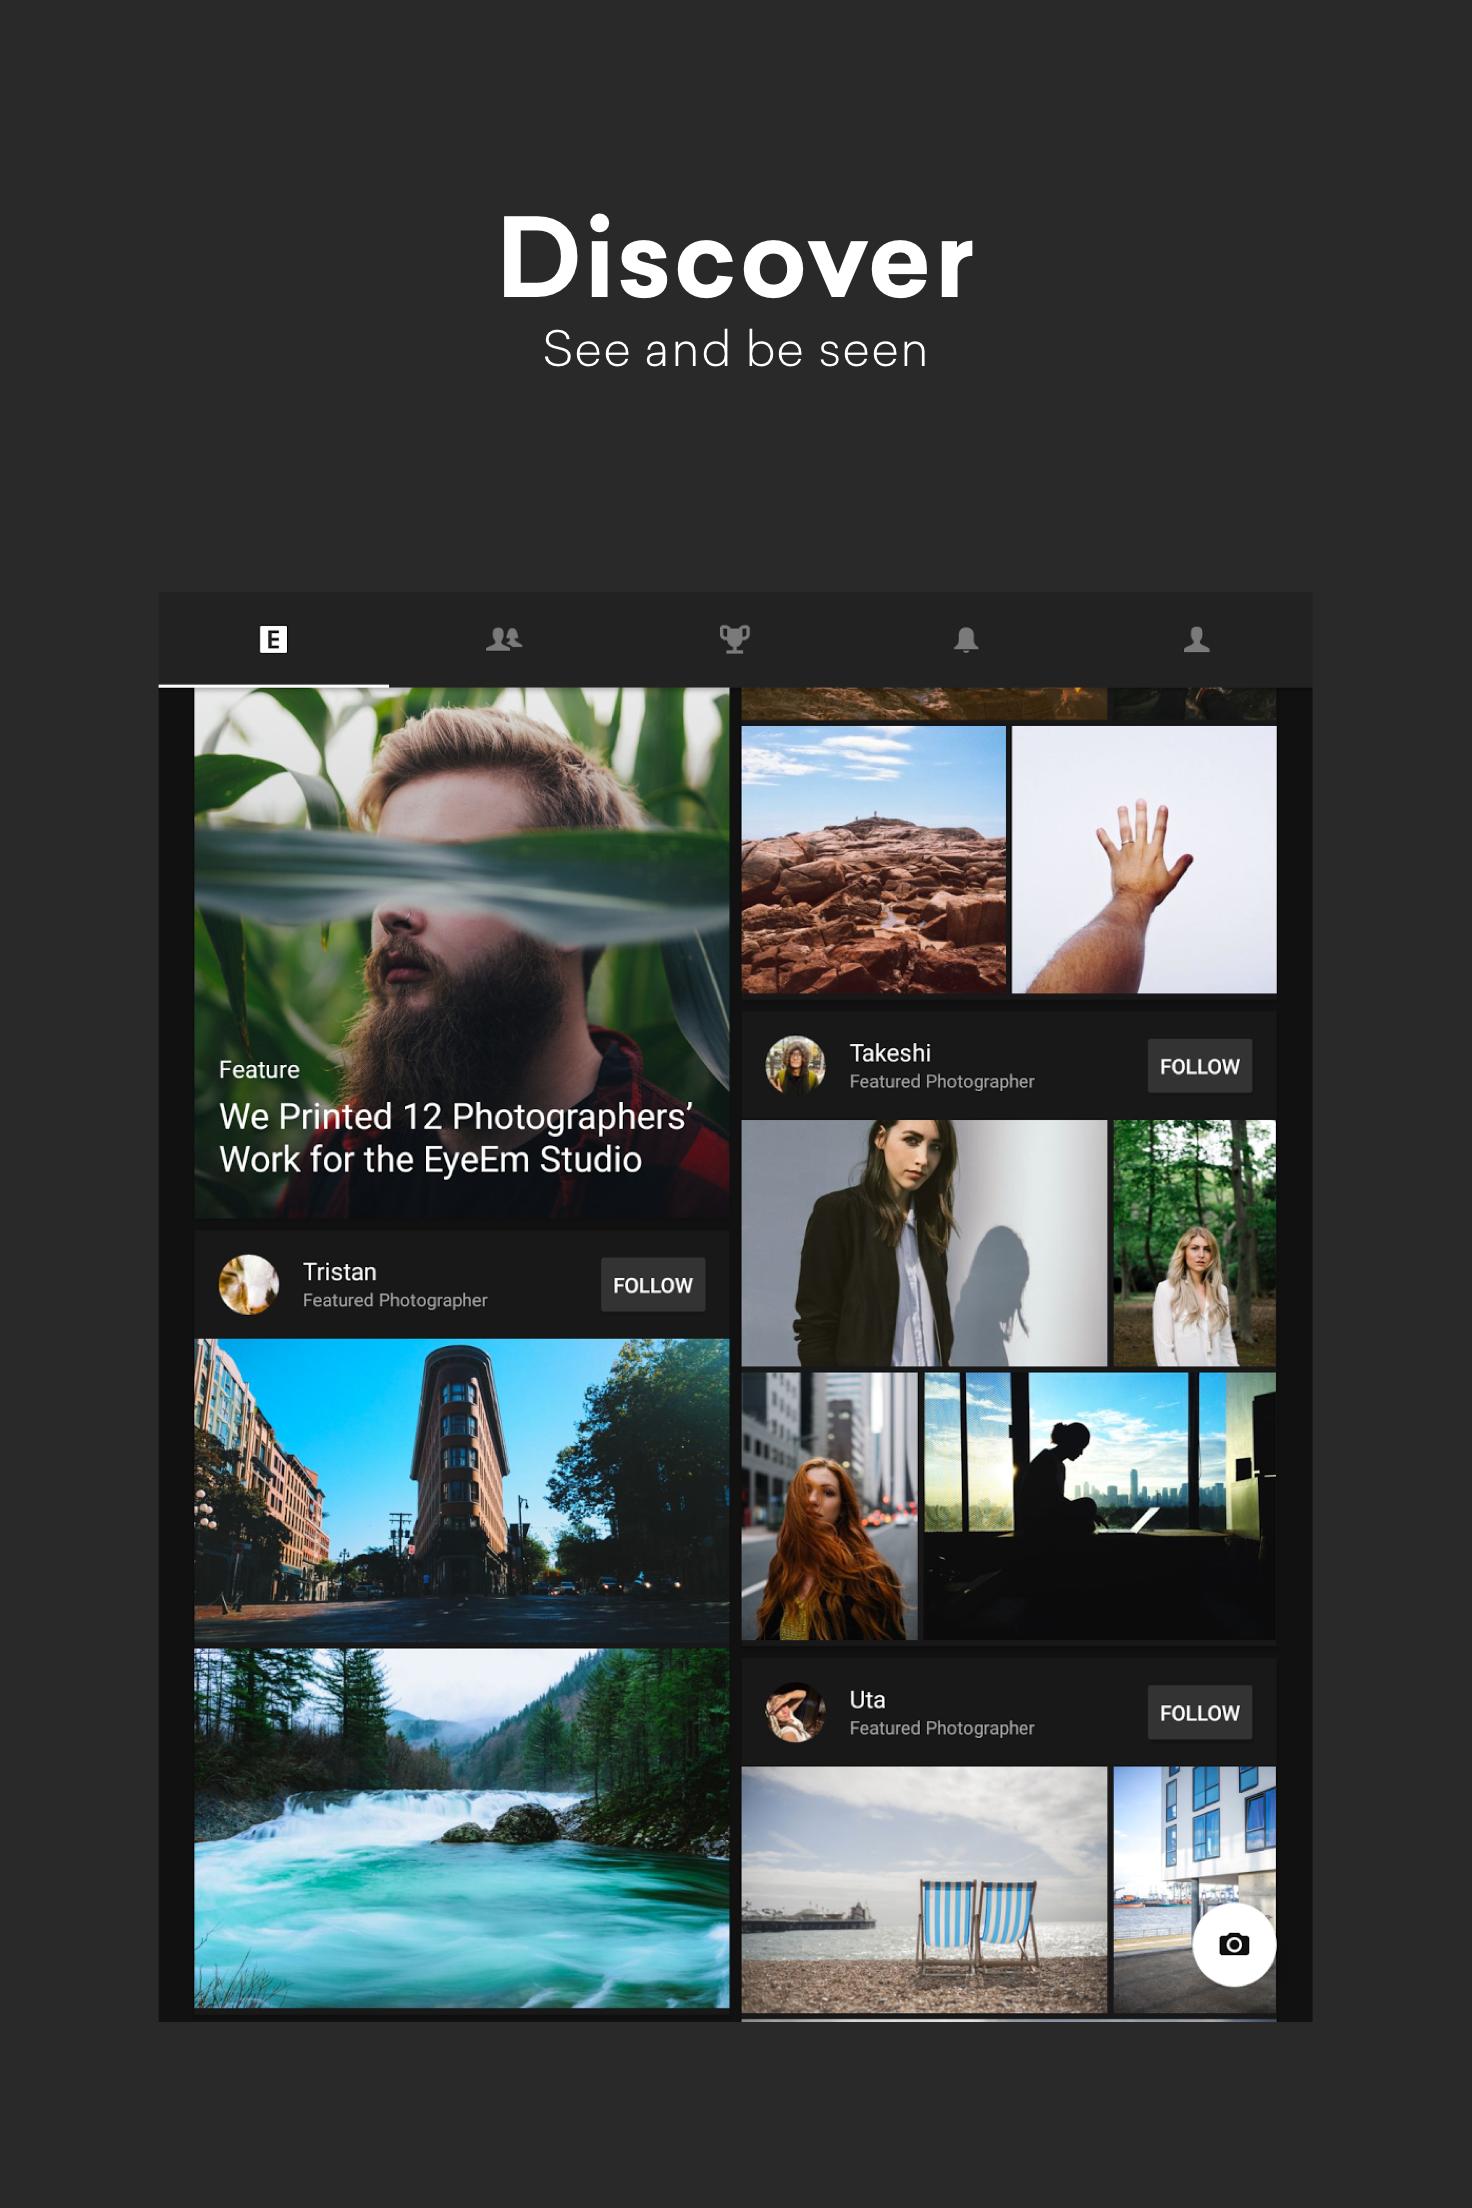 EyeEm Free Photo App For Sharing & Selling Images 8.1 Screenshot 13